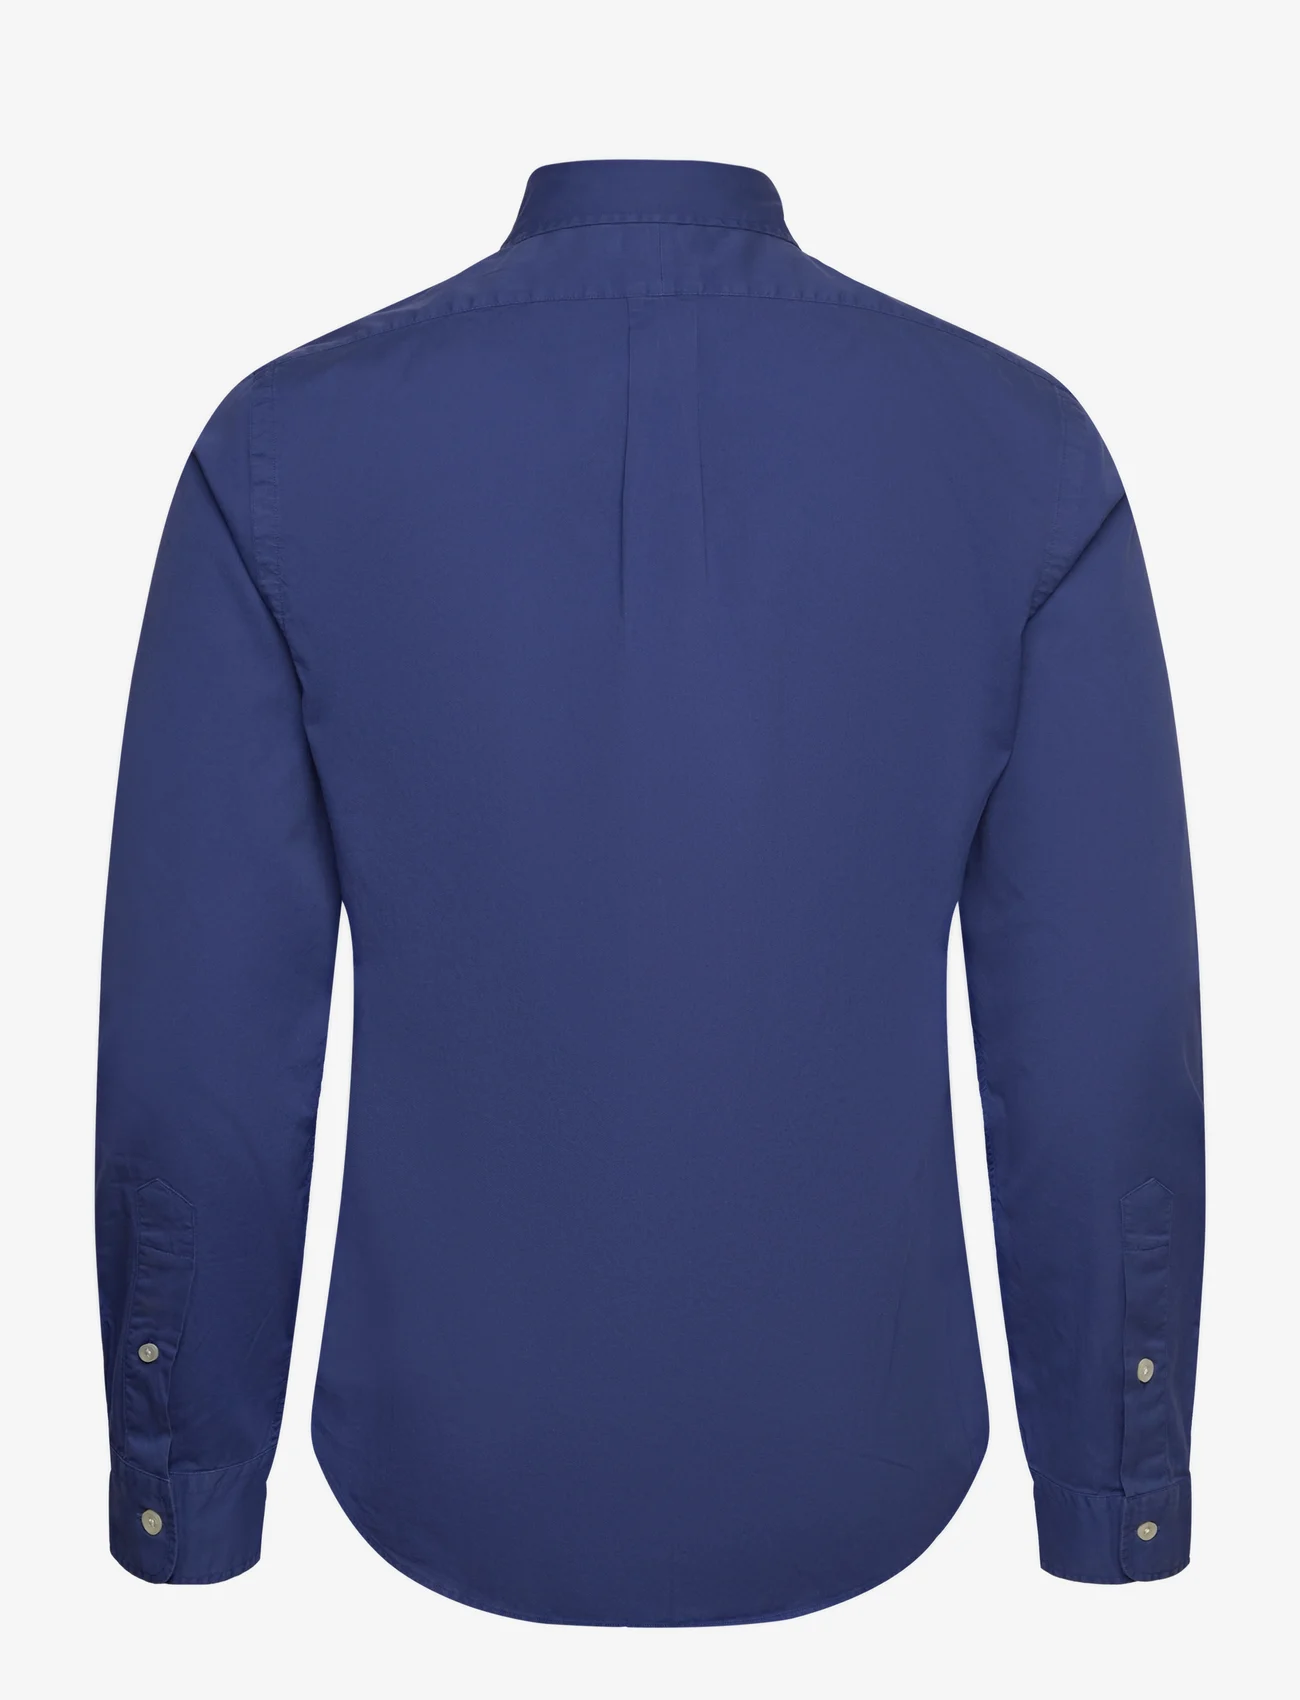 Polo Ralph Lauren - Slim Fit Garment-Dyed Twill Shirt - casual skjortor - beach royal - 1